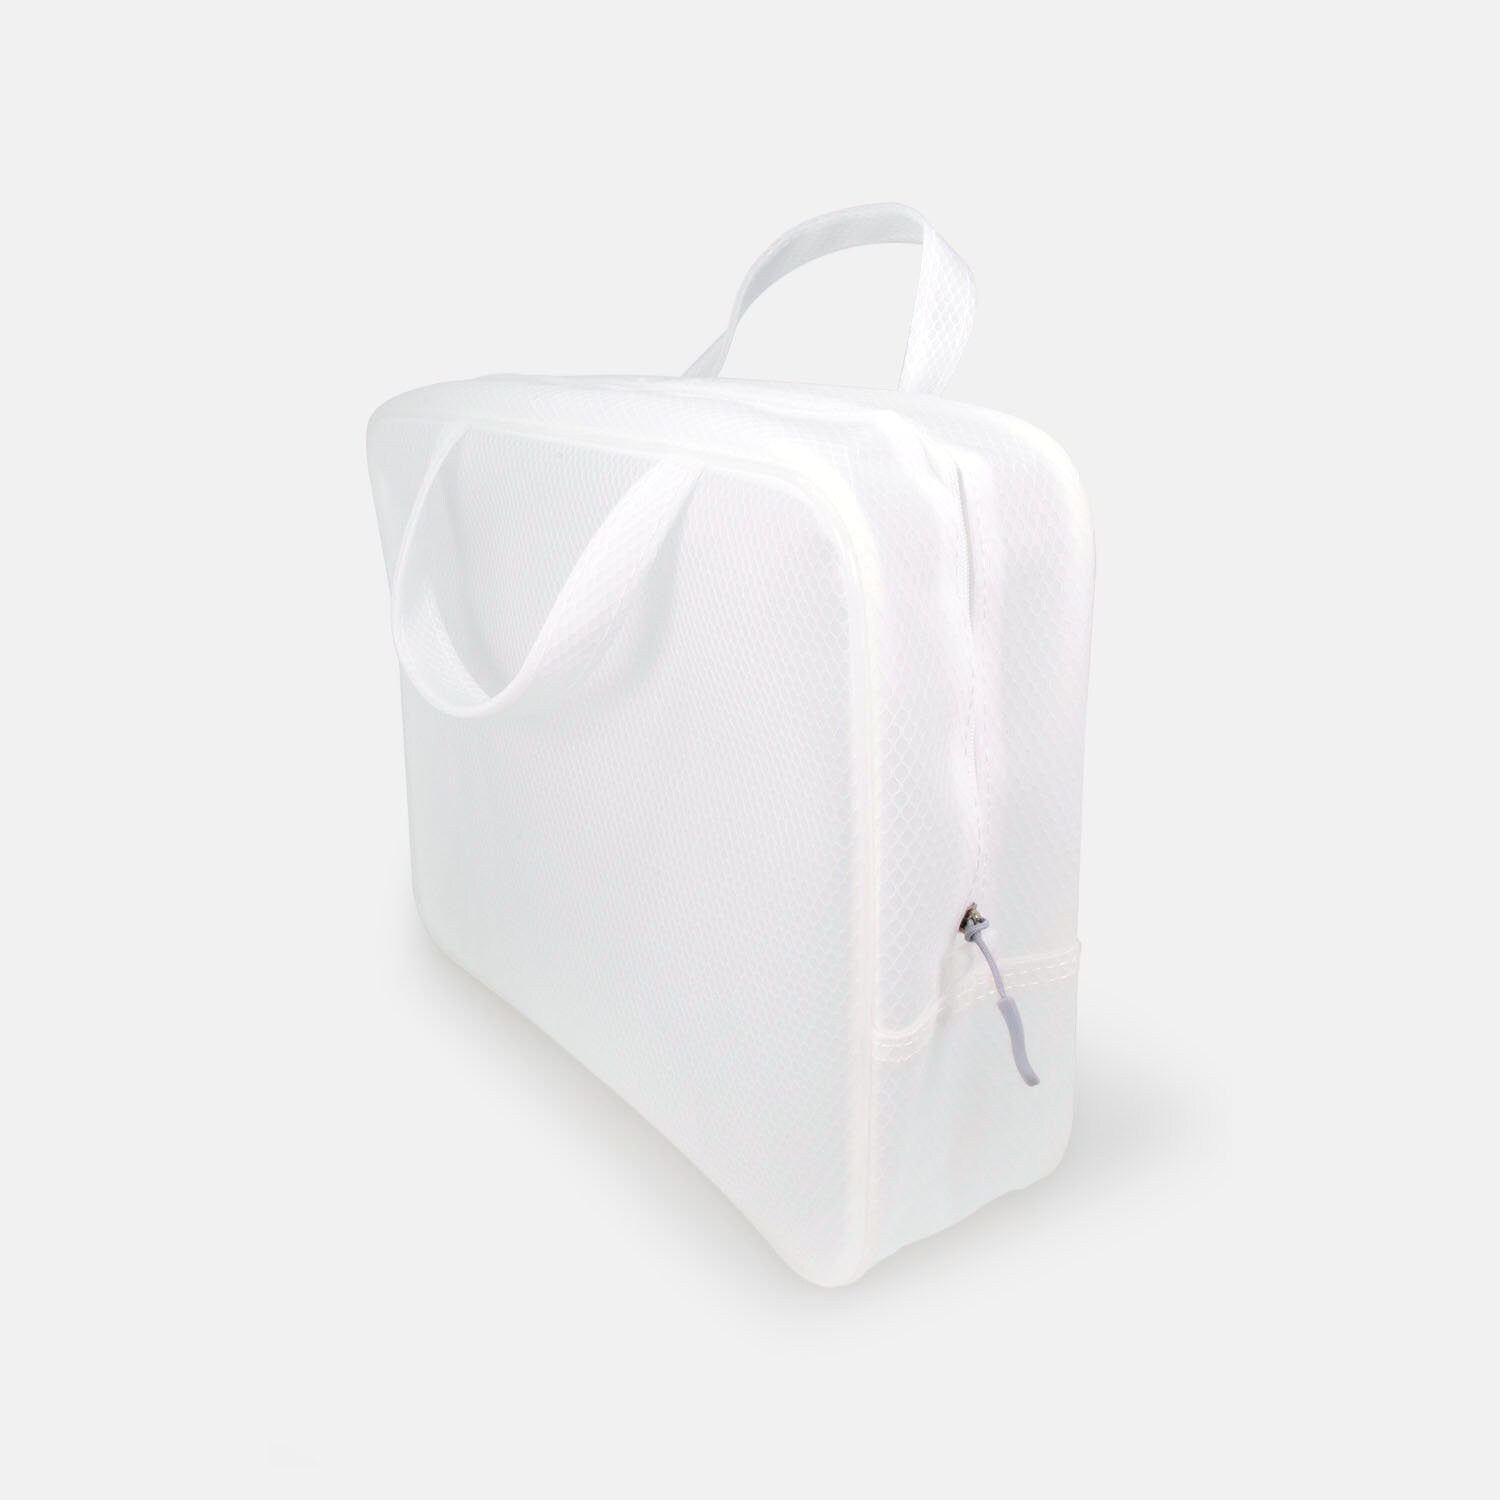 Waterproof Travel Organizer Bag / Accessories Pouch